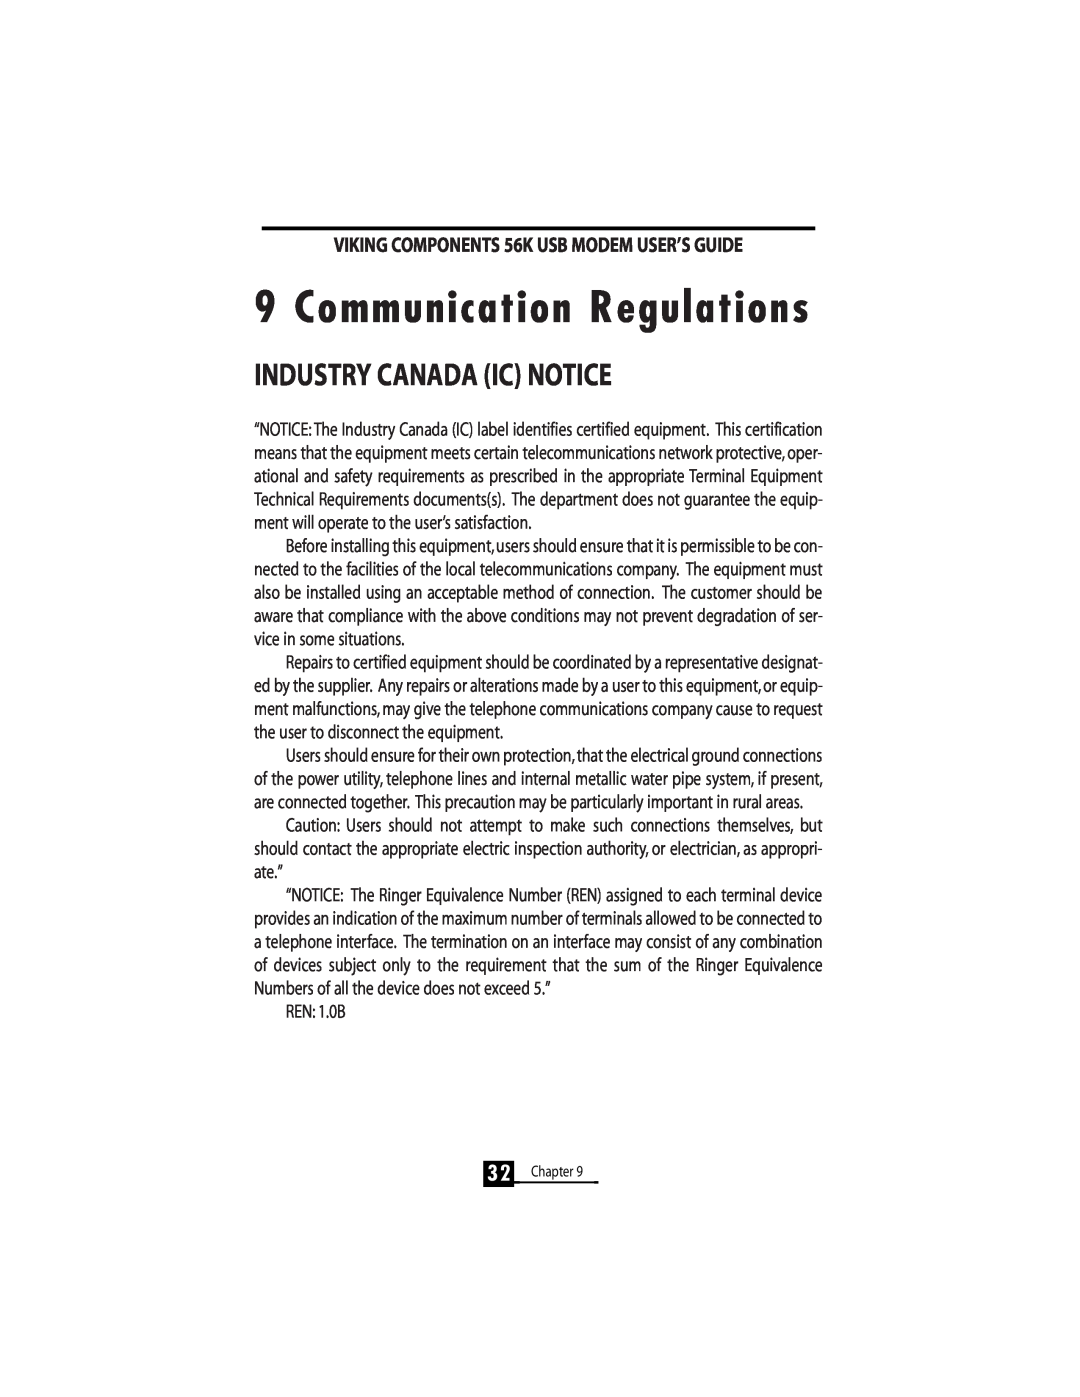 Viking InterWorks 56K manual Communication Regulations, Industry Canada Ic Notice, REN 1.0B 